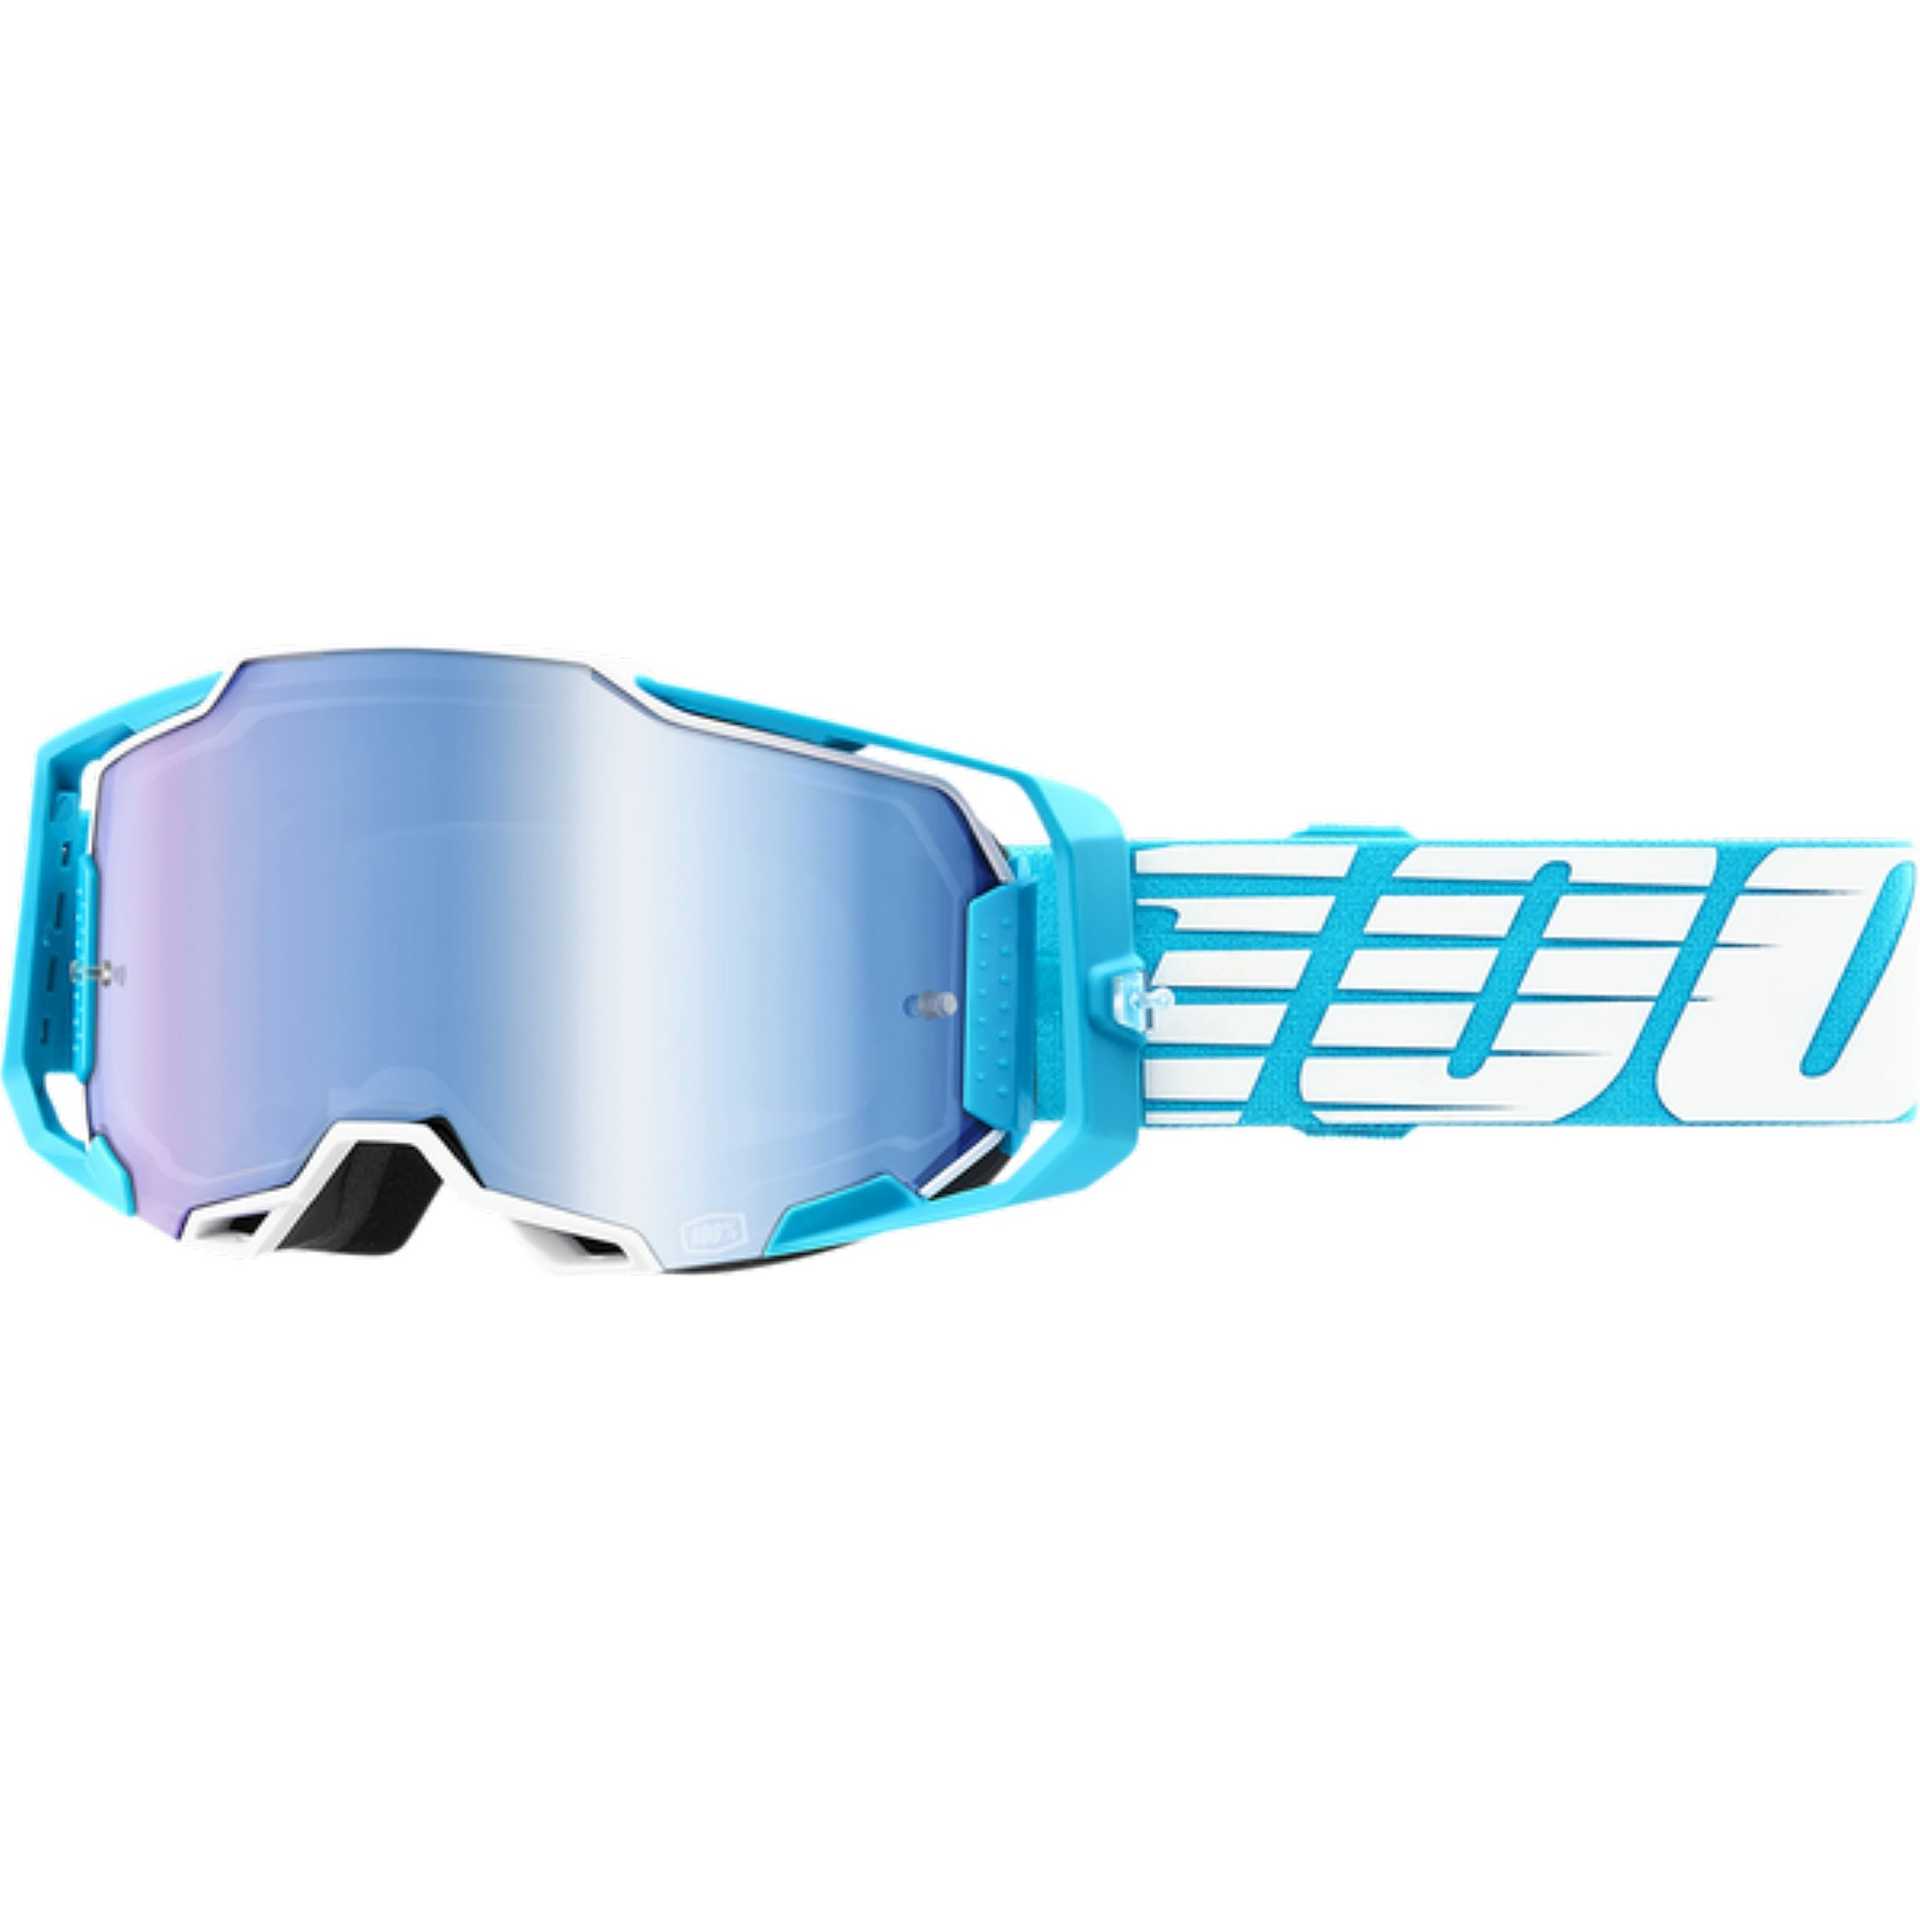 Occhiali Maschera Moto Cross Enduro 100% ARMEGA Oversize Sky Lente Blu  Vendita Online 